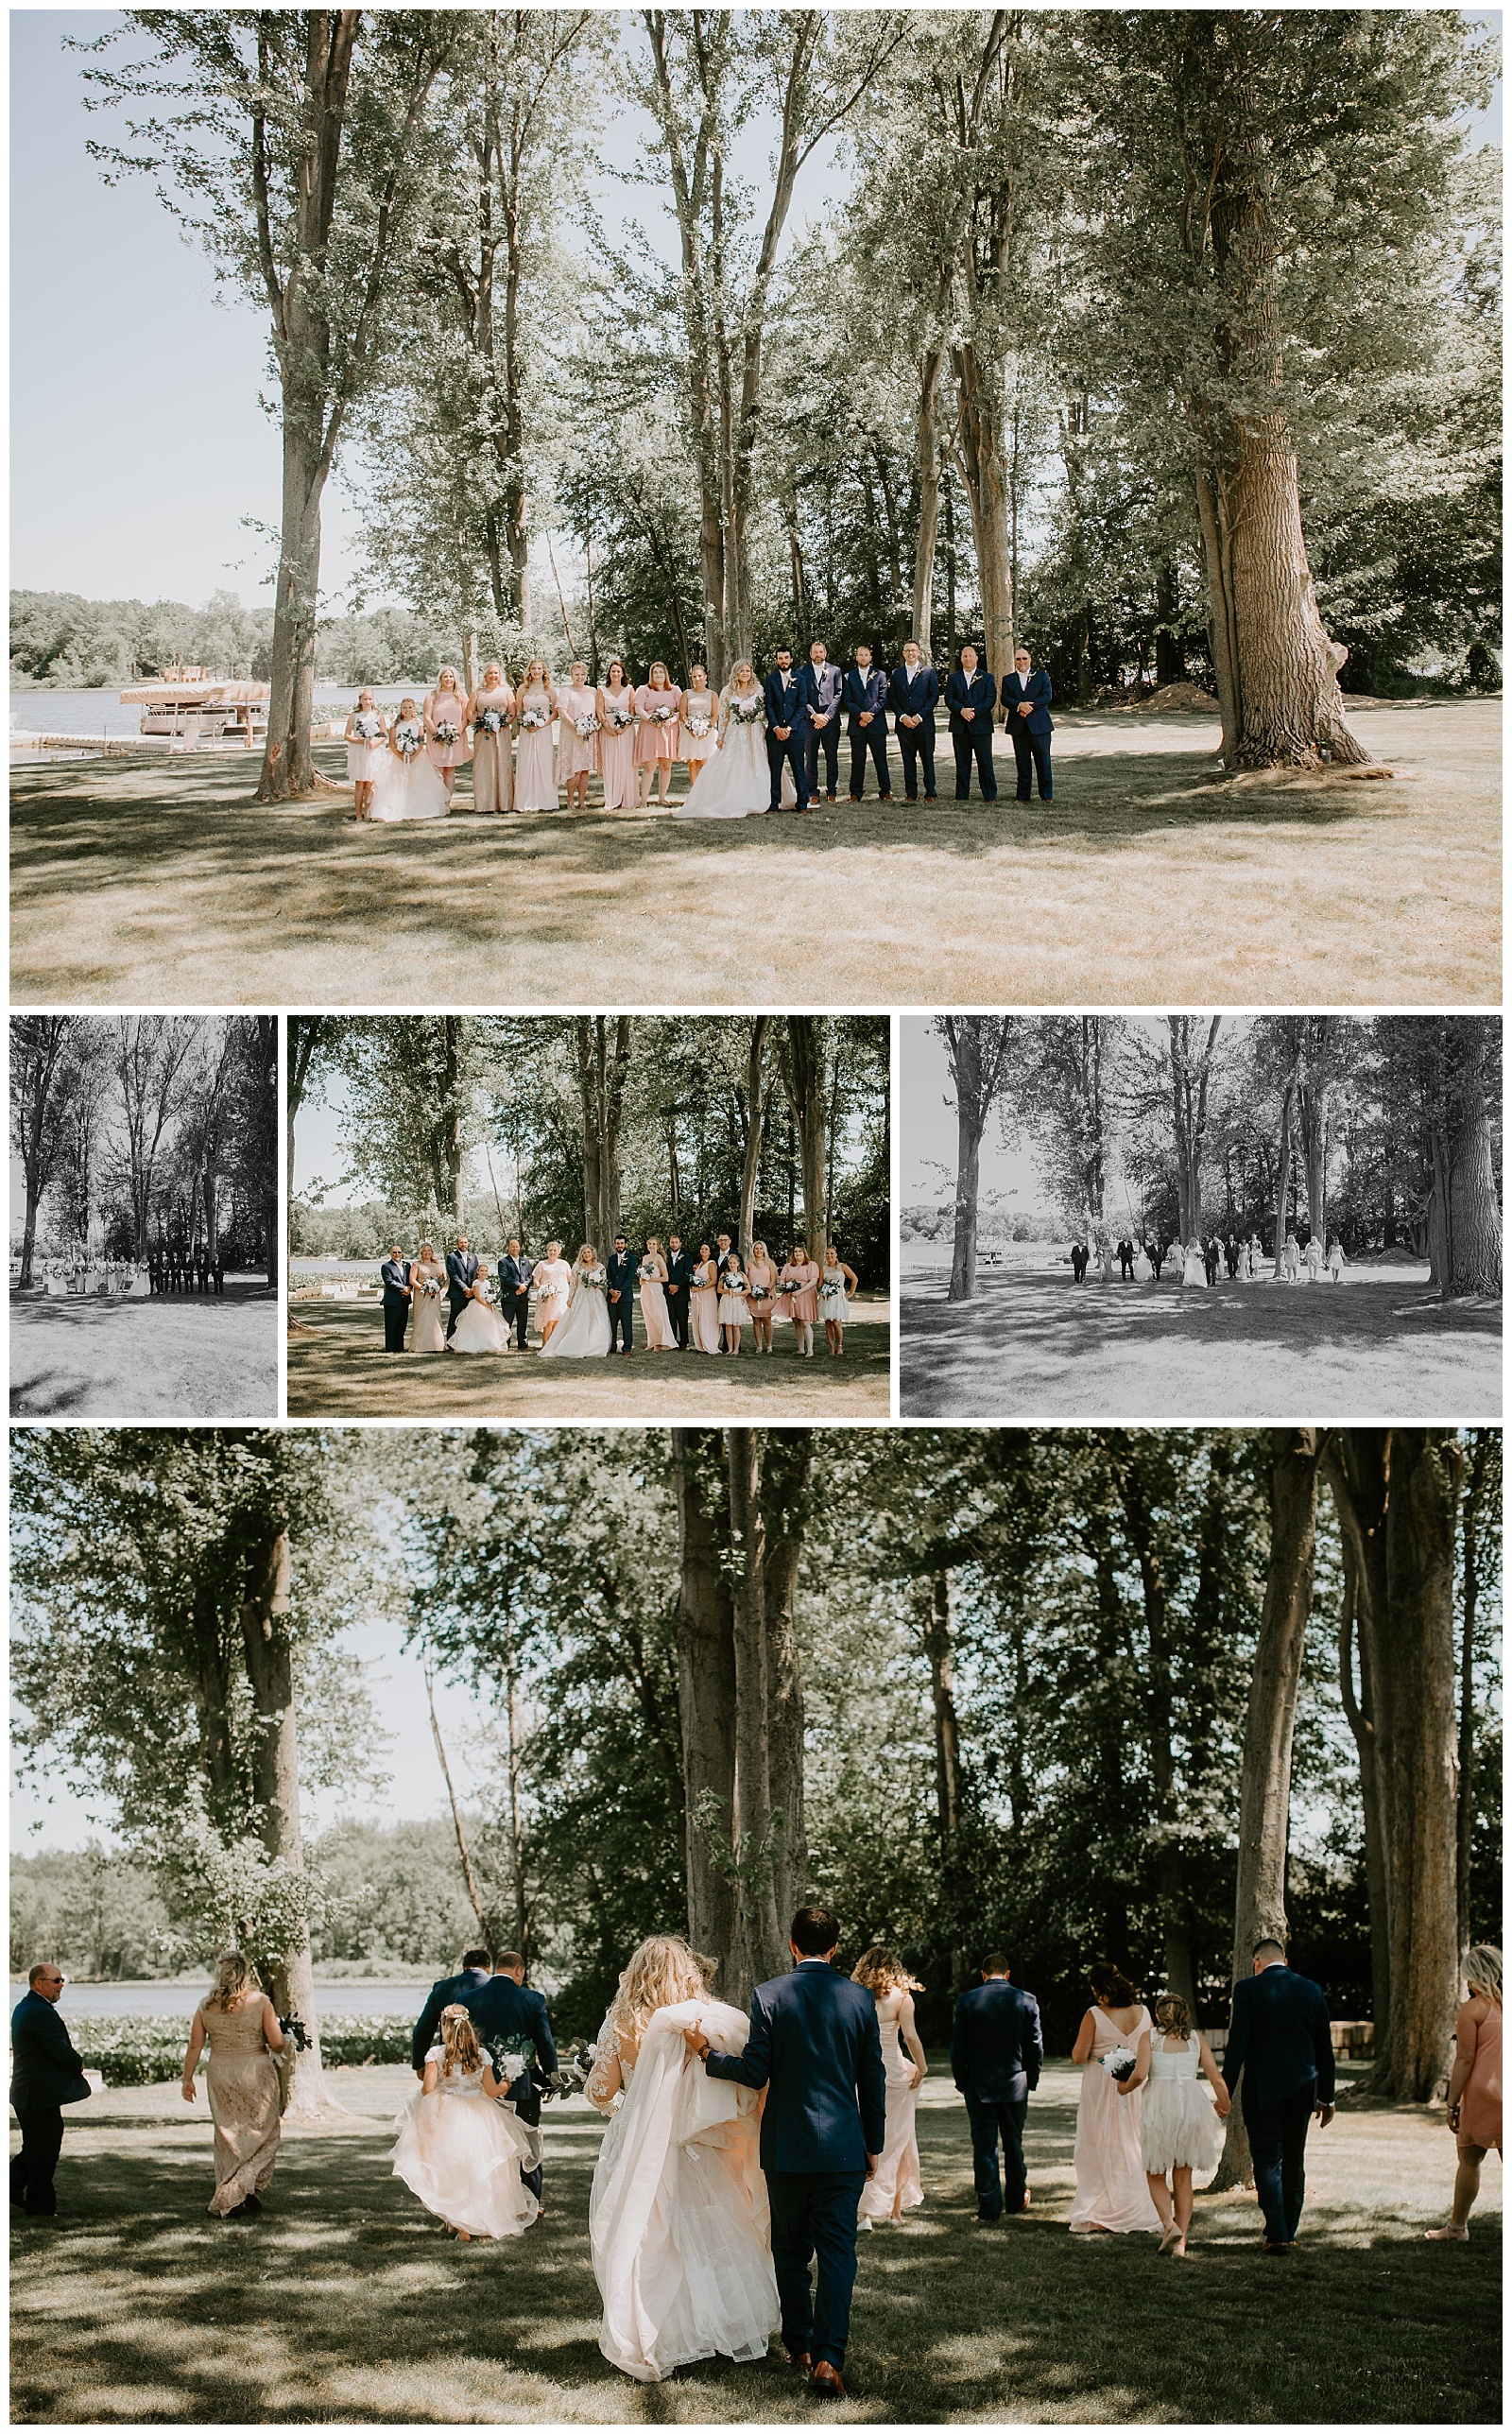 Michigan Backyard wedding photographer Liv Lyszyk Photography based in Grand Rapids MI